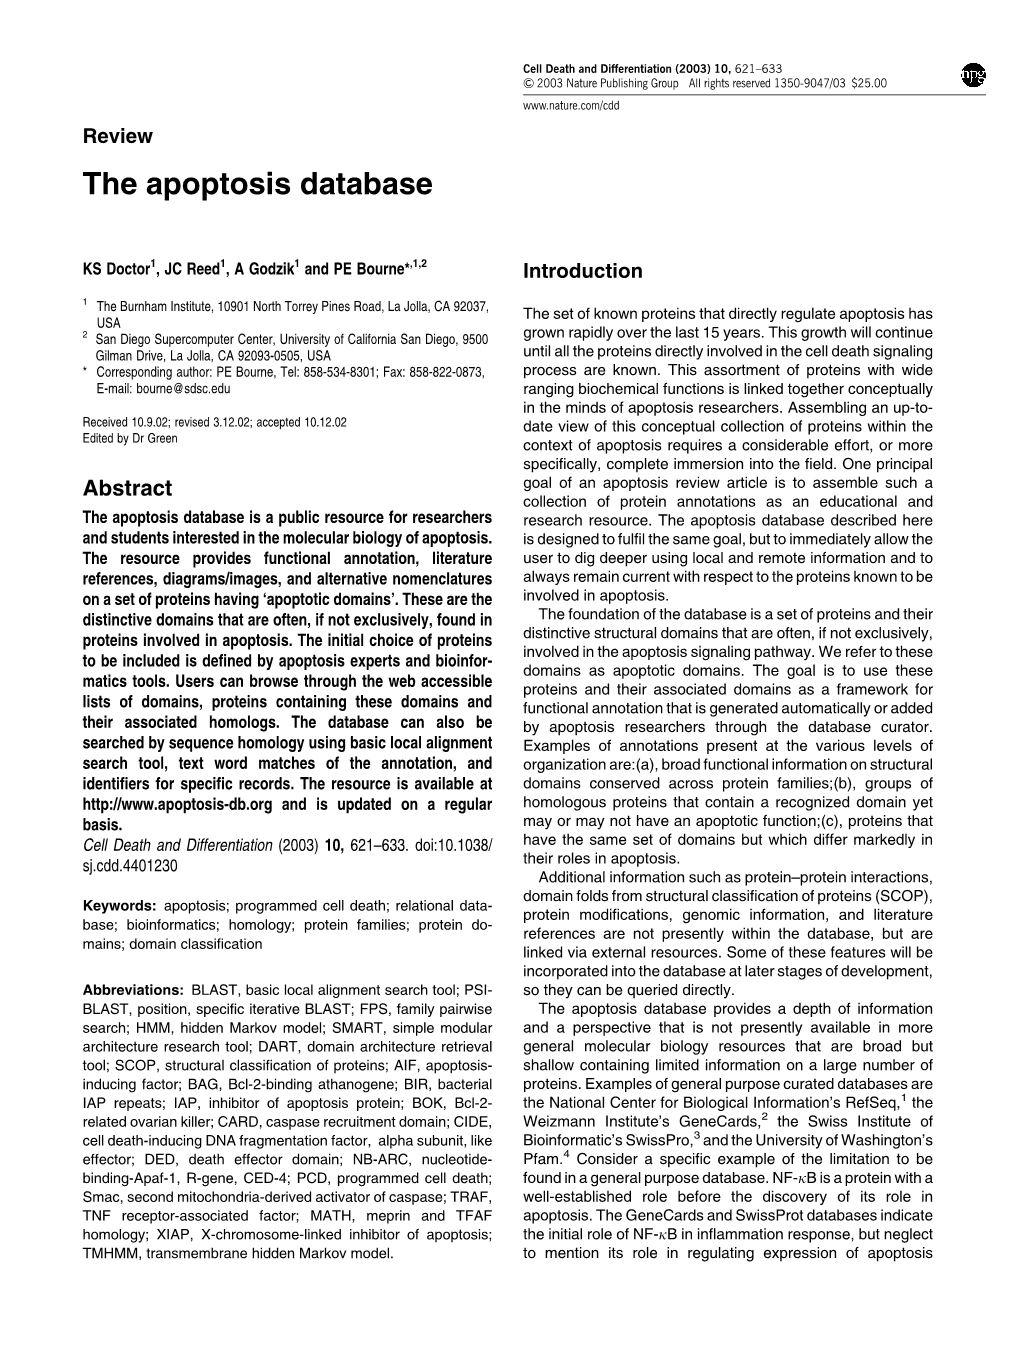 The Apoptosis Database